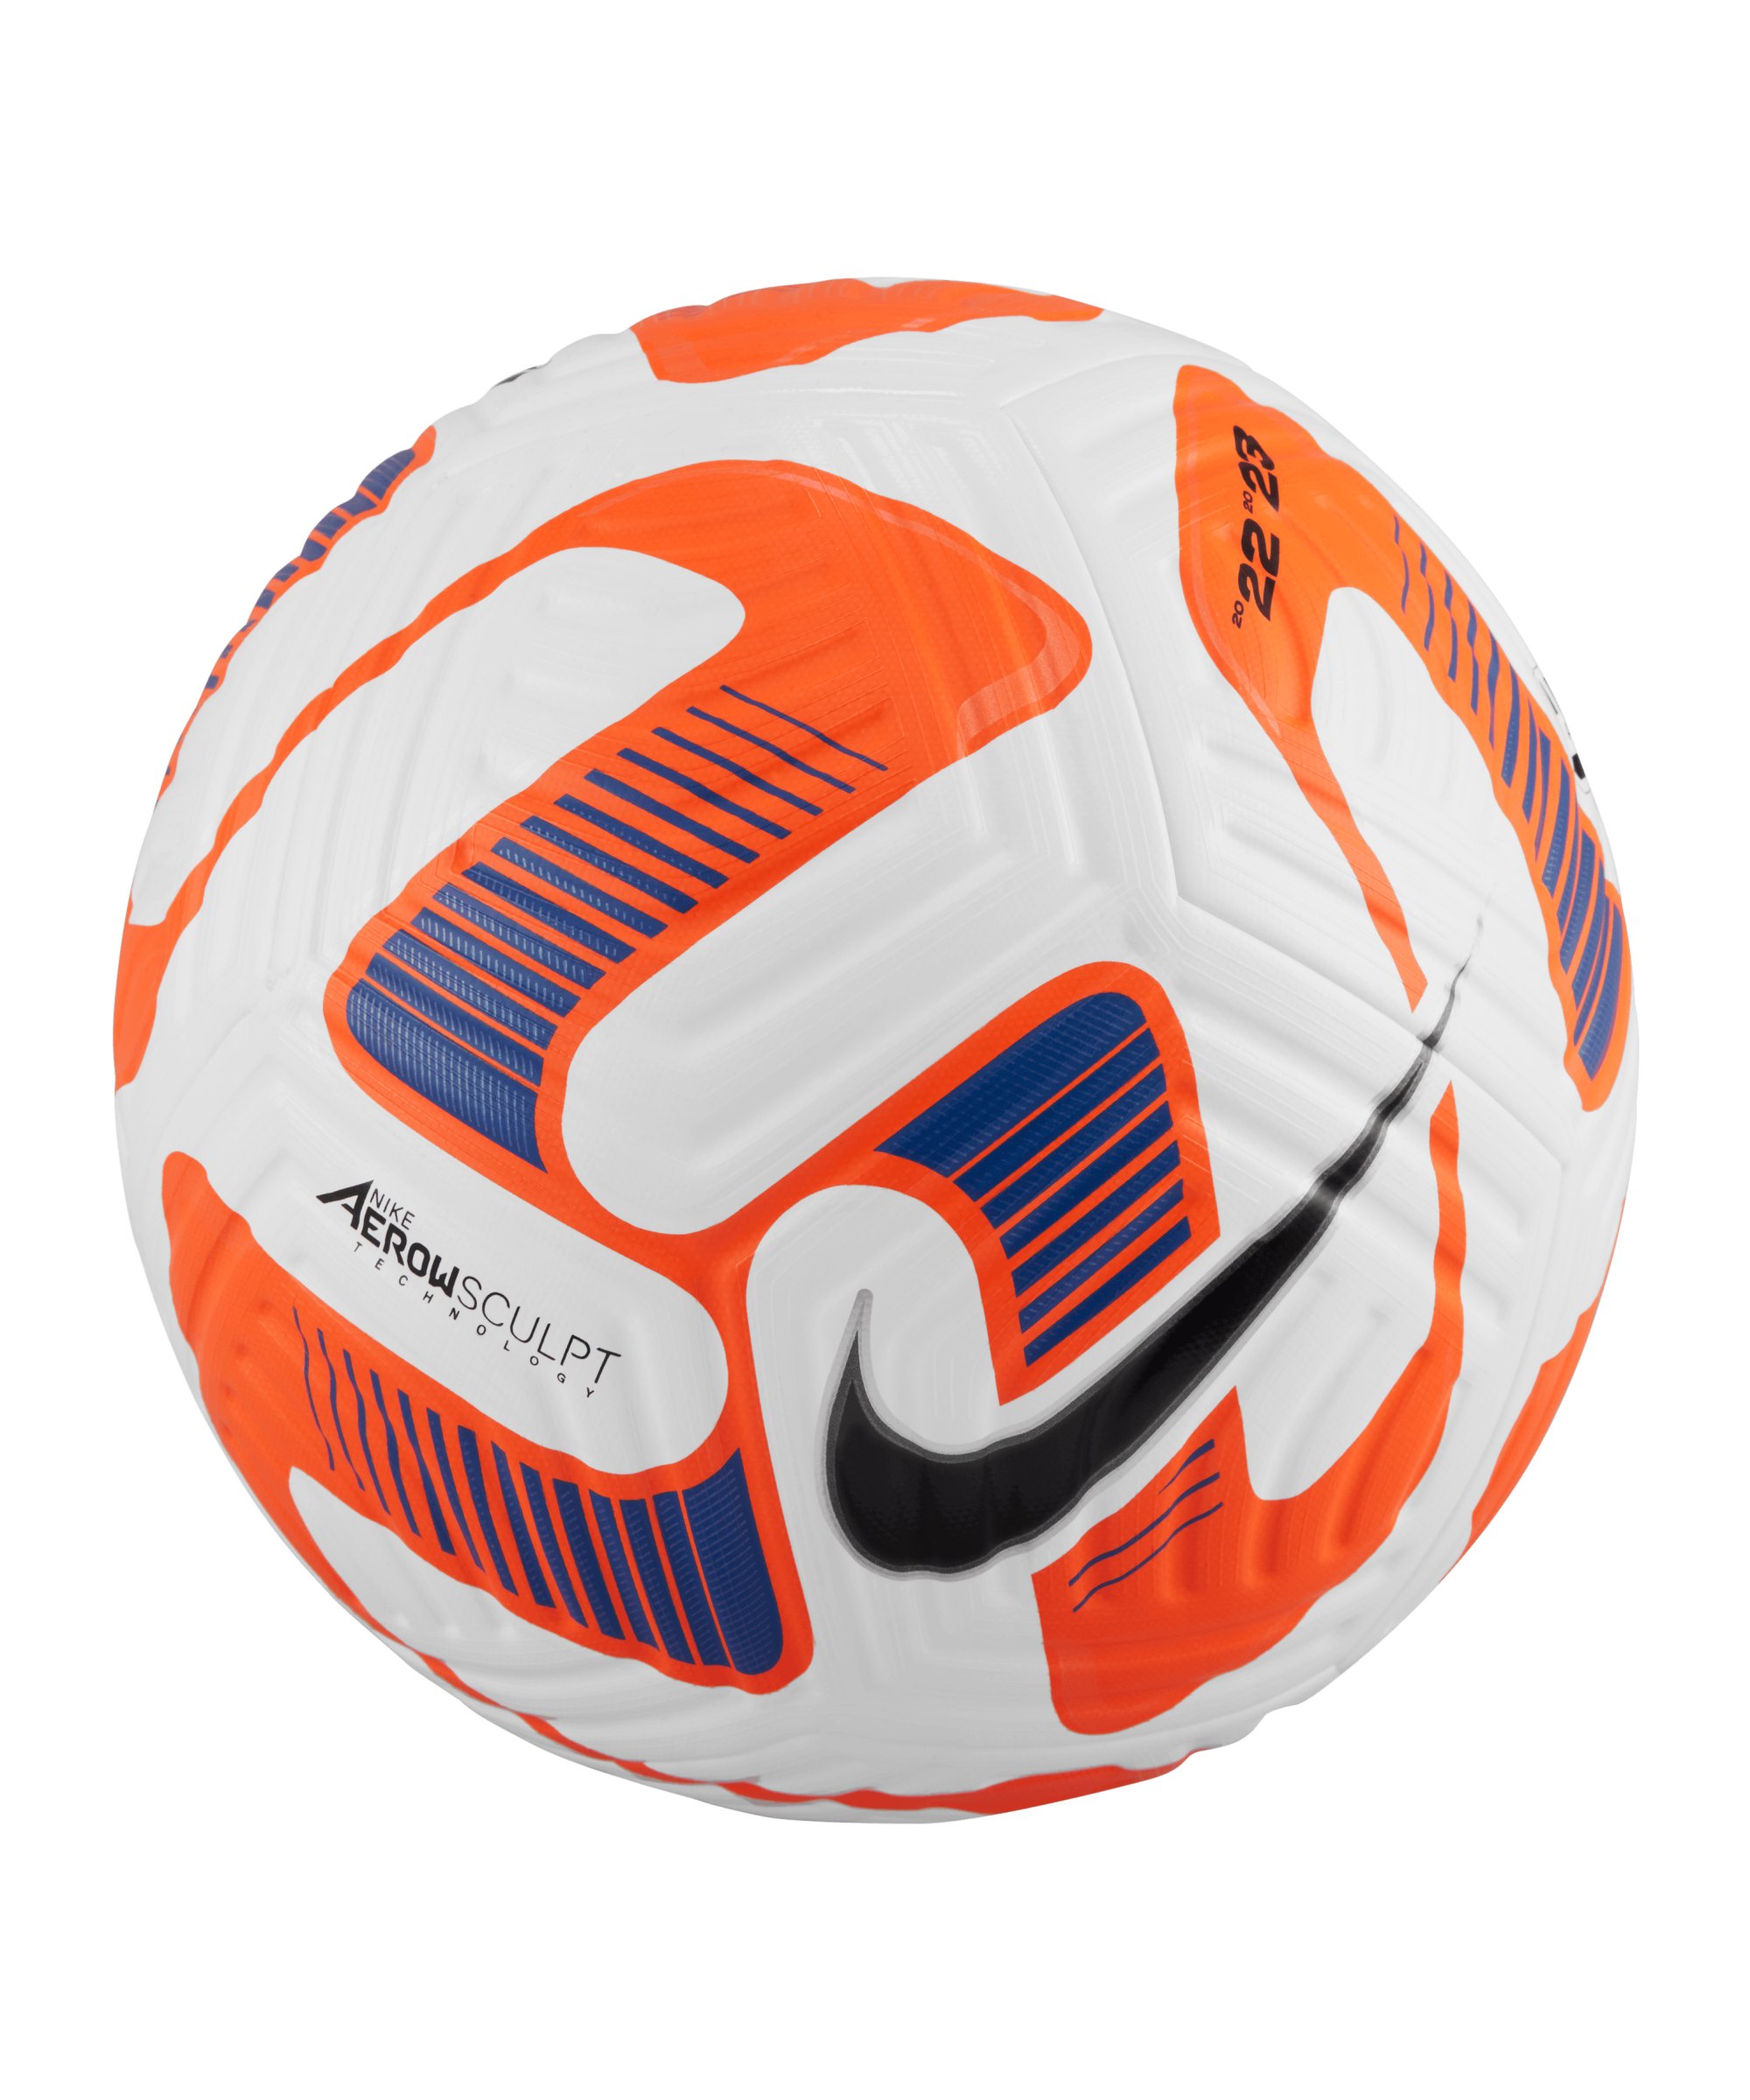 Nike Flight Spielball Weiss Orange F100 - weiss